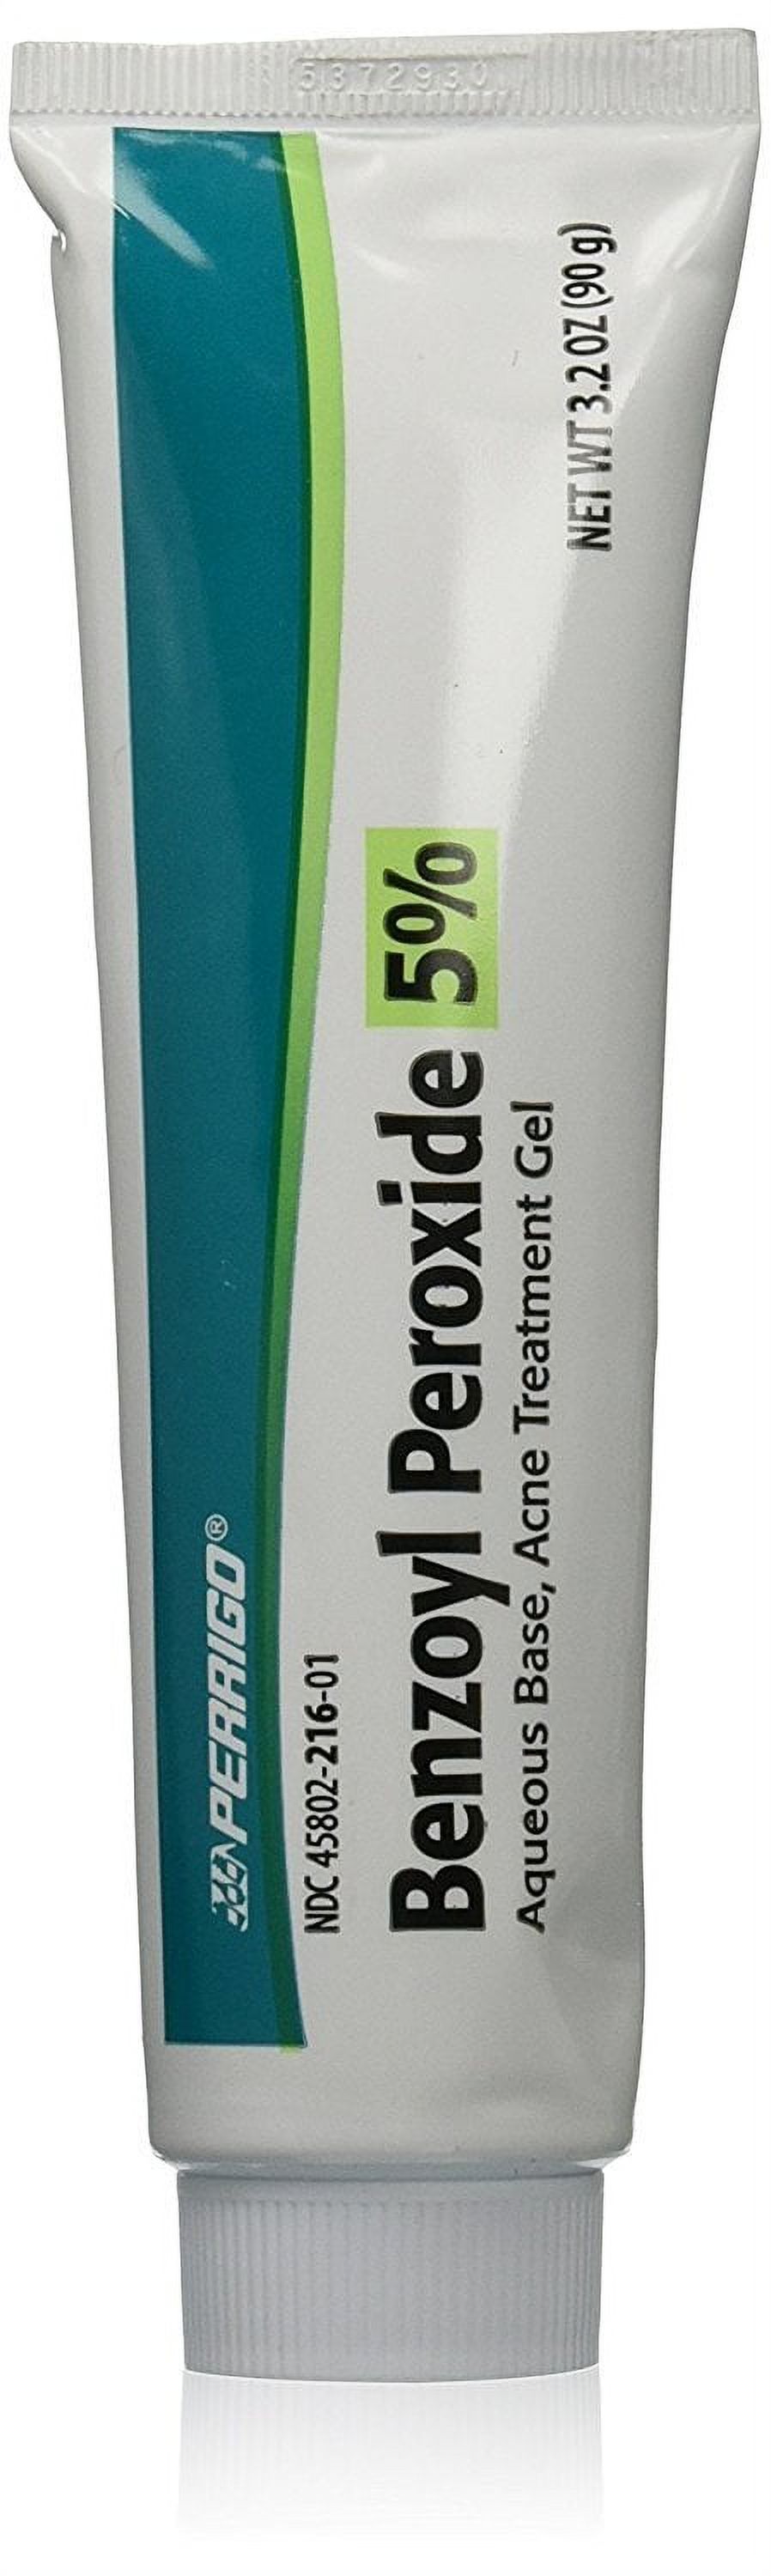 Perrigo Benzoyl Peroxide 5% Topical Large Acne Treatment Gels, 3.2 oz - image 1 of 5